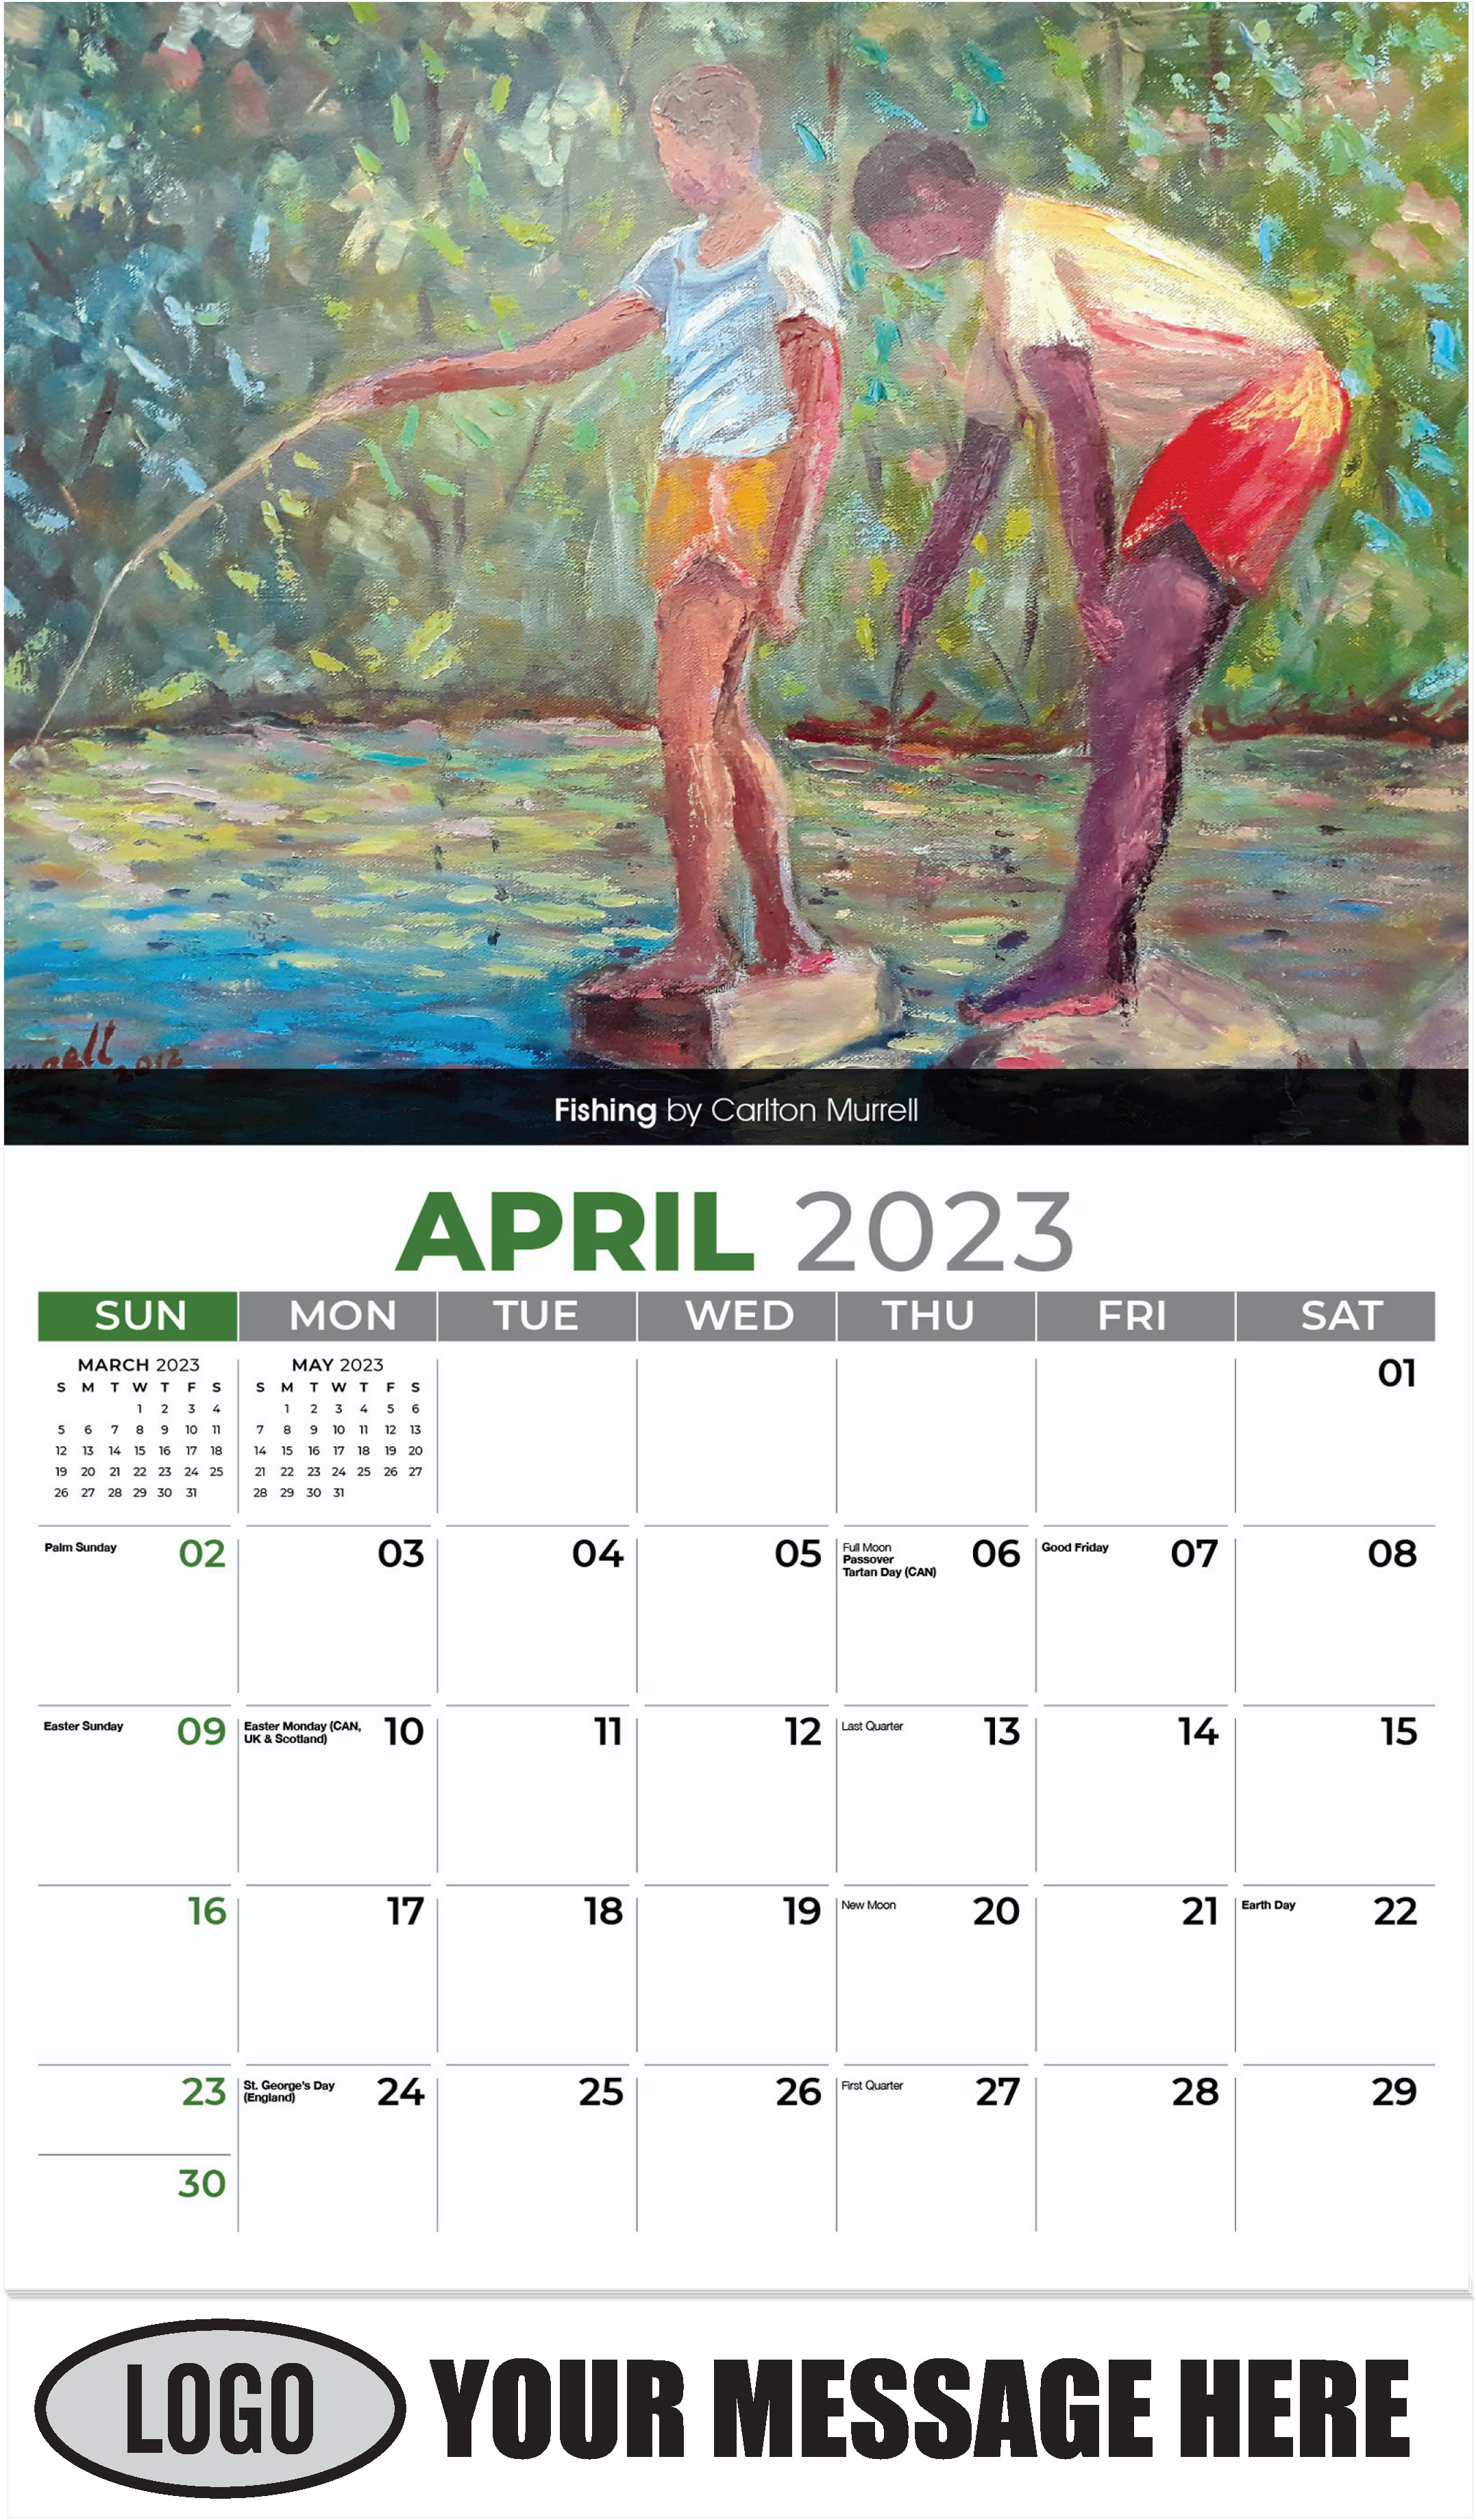 Fishing by Carlton Murrell - April - Celebration of African American Art 2023 Promotional Calendar